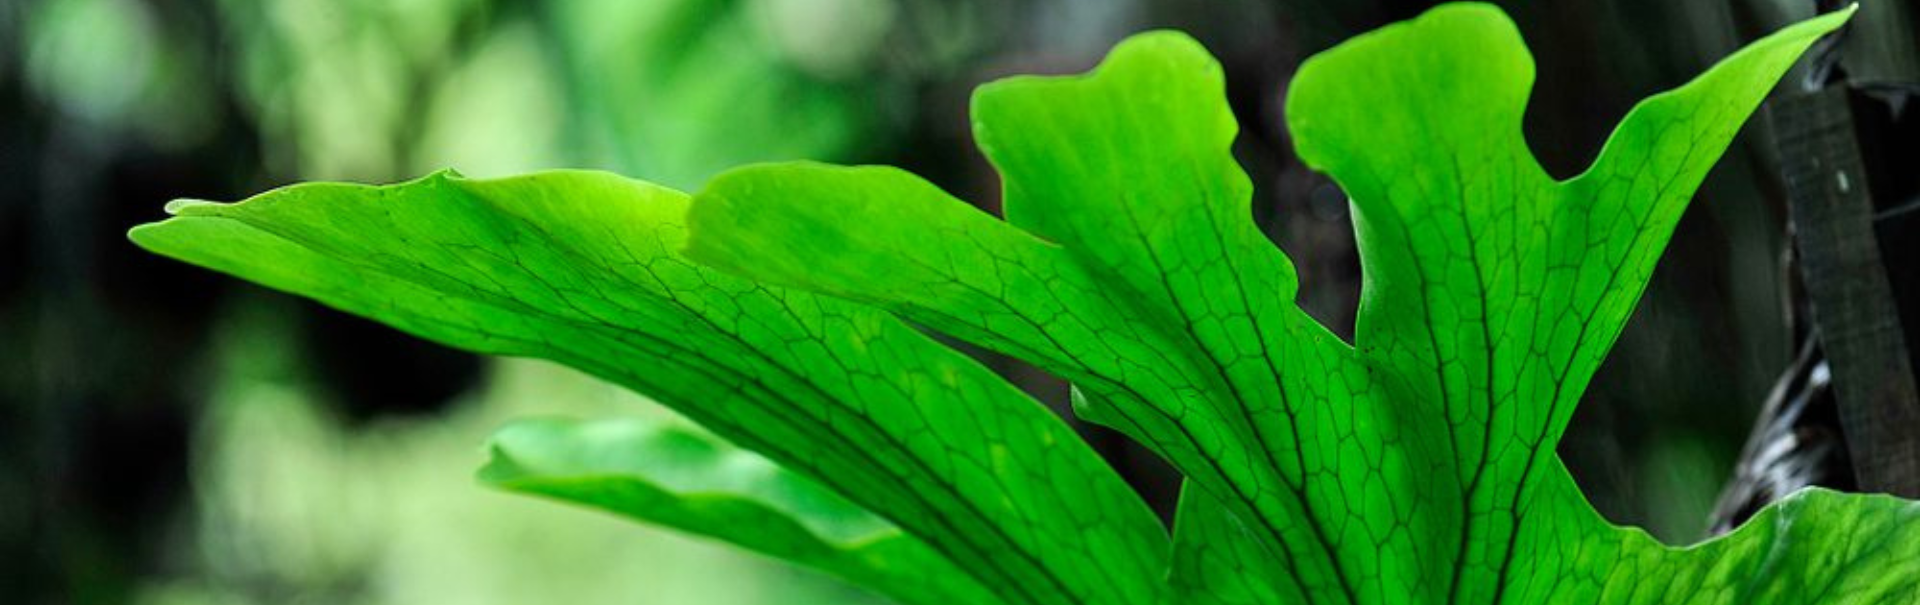 Platycerium leaf